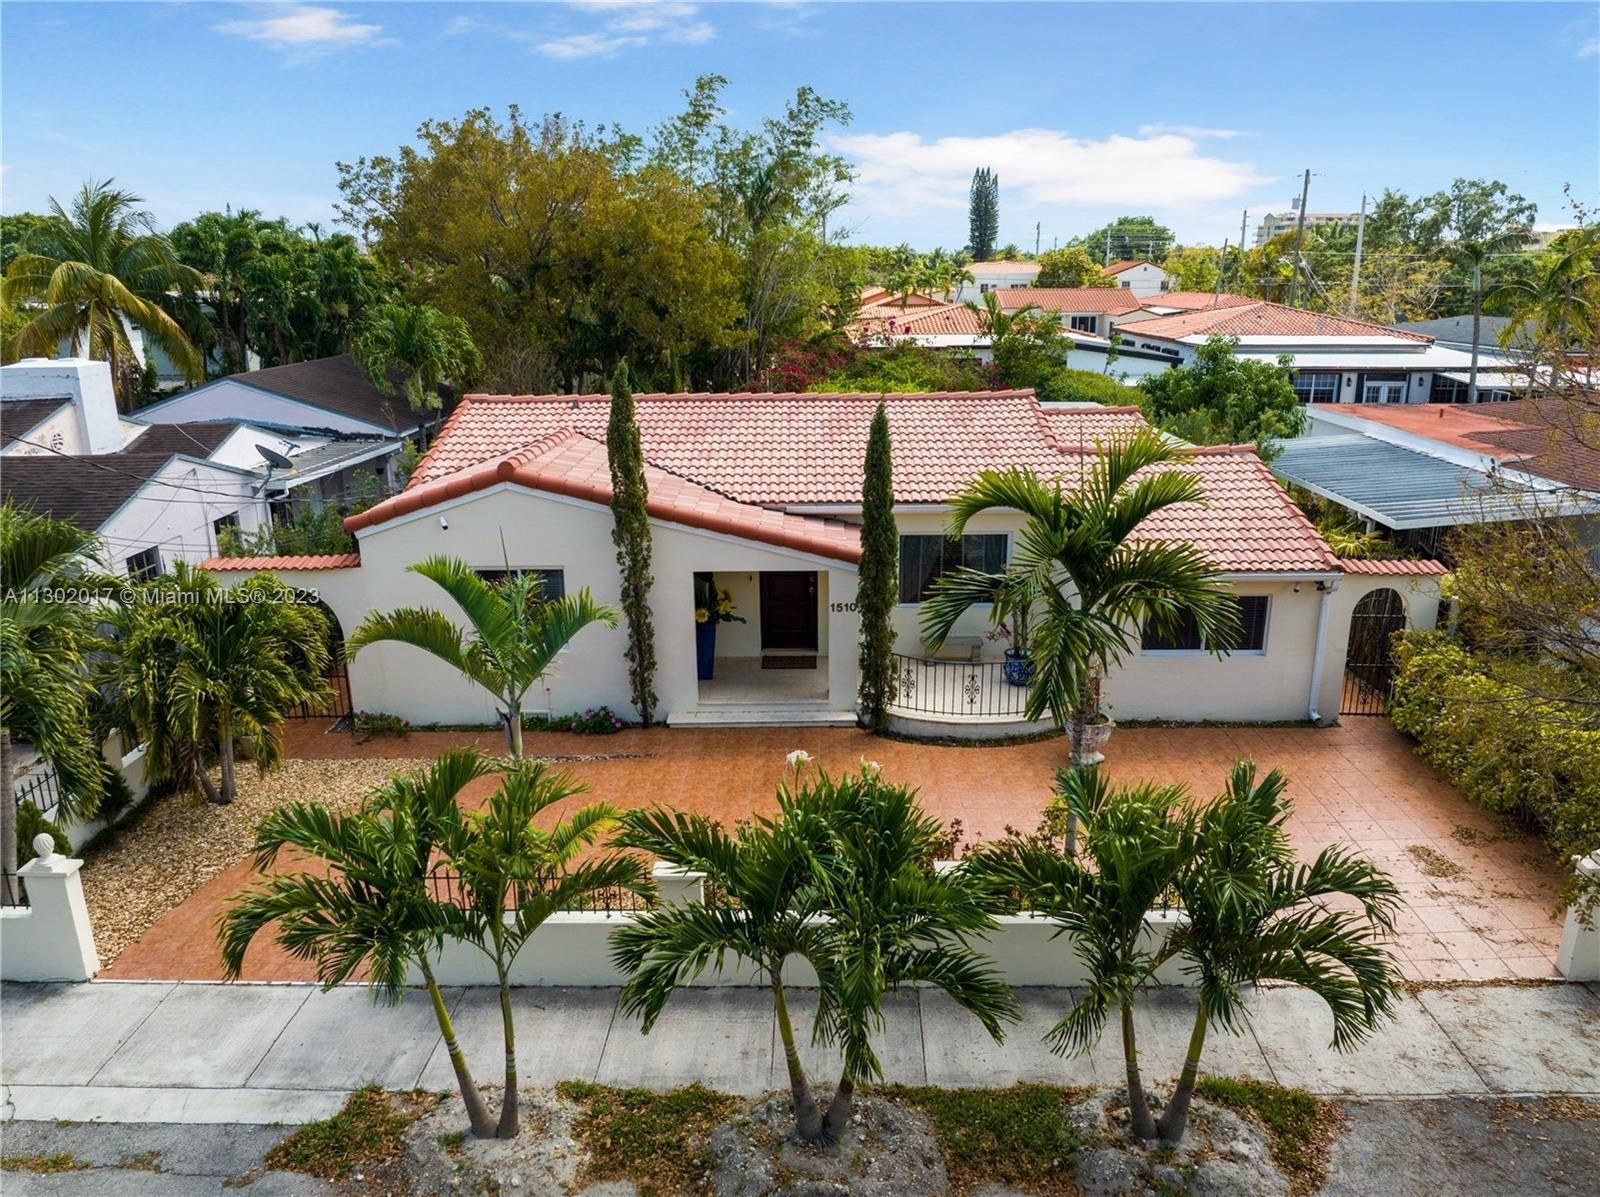 Real estate property located at 1510 19th St, Miami-Dade County, Miami, FL